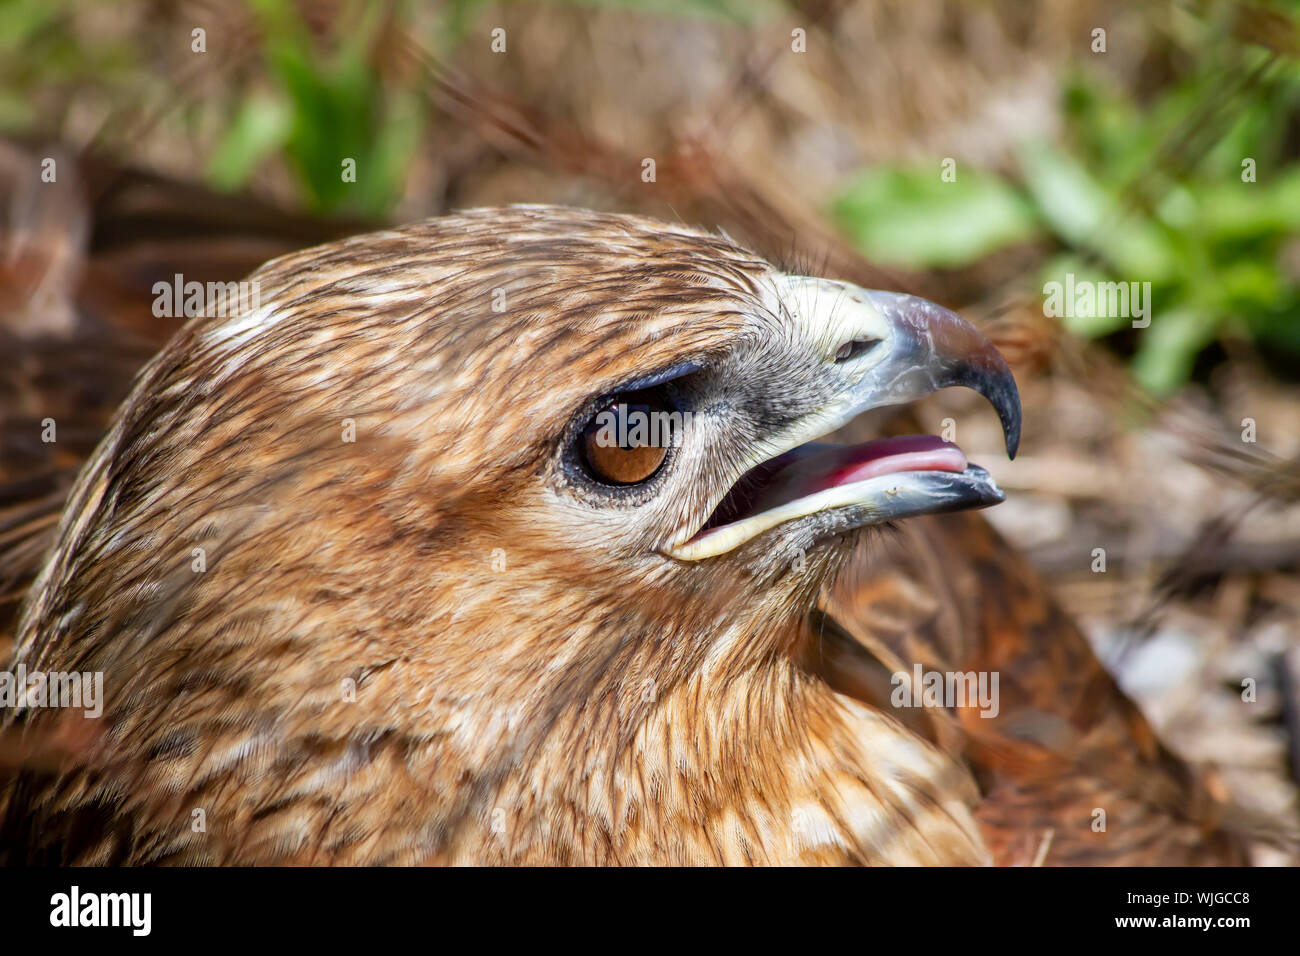 Beautiful born bird portrait, ornithology concept Stock Photo